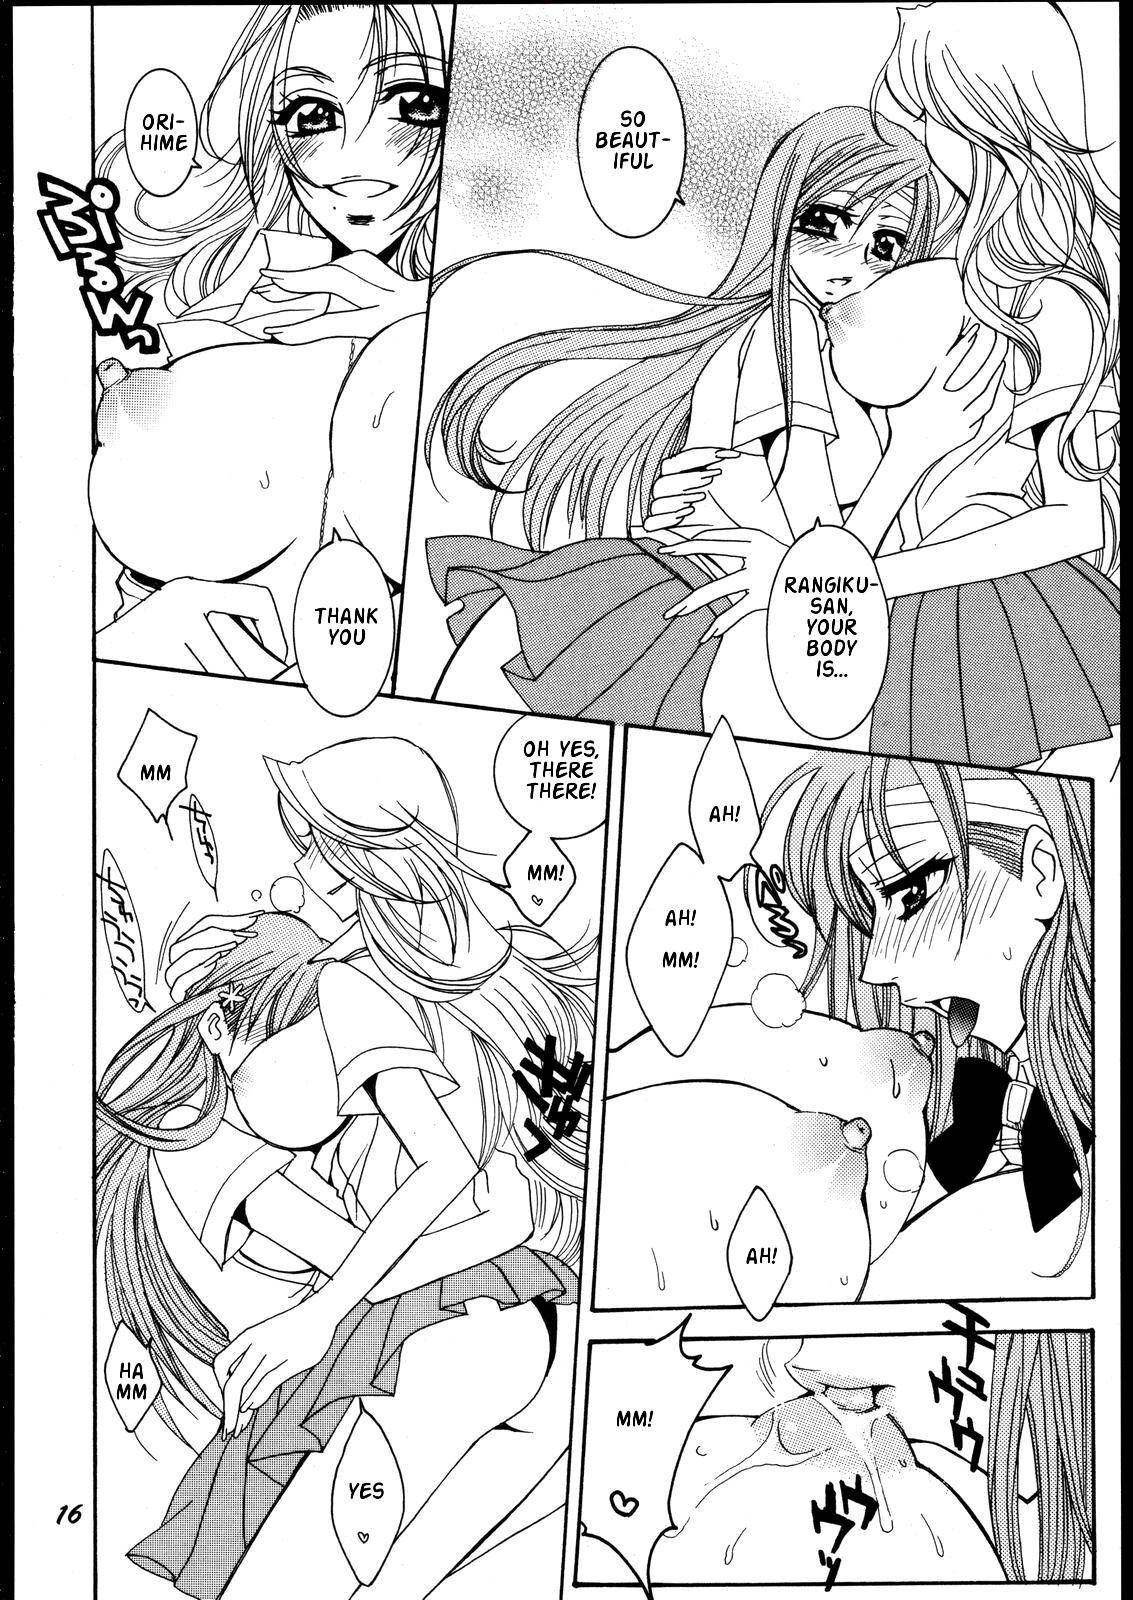 Love Potion #9 bleach 14 hentai manga